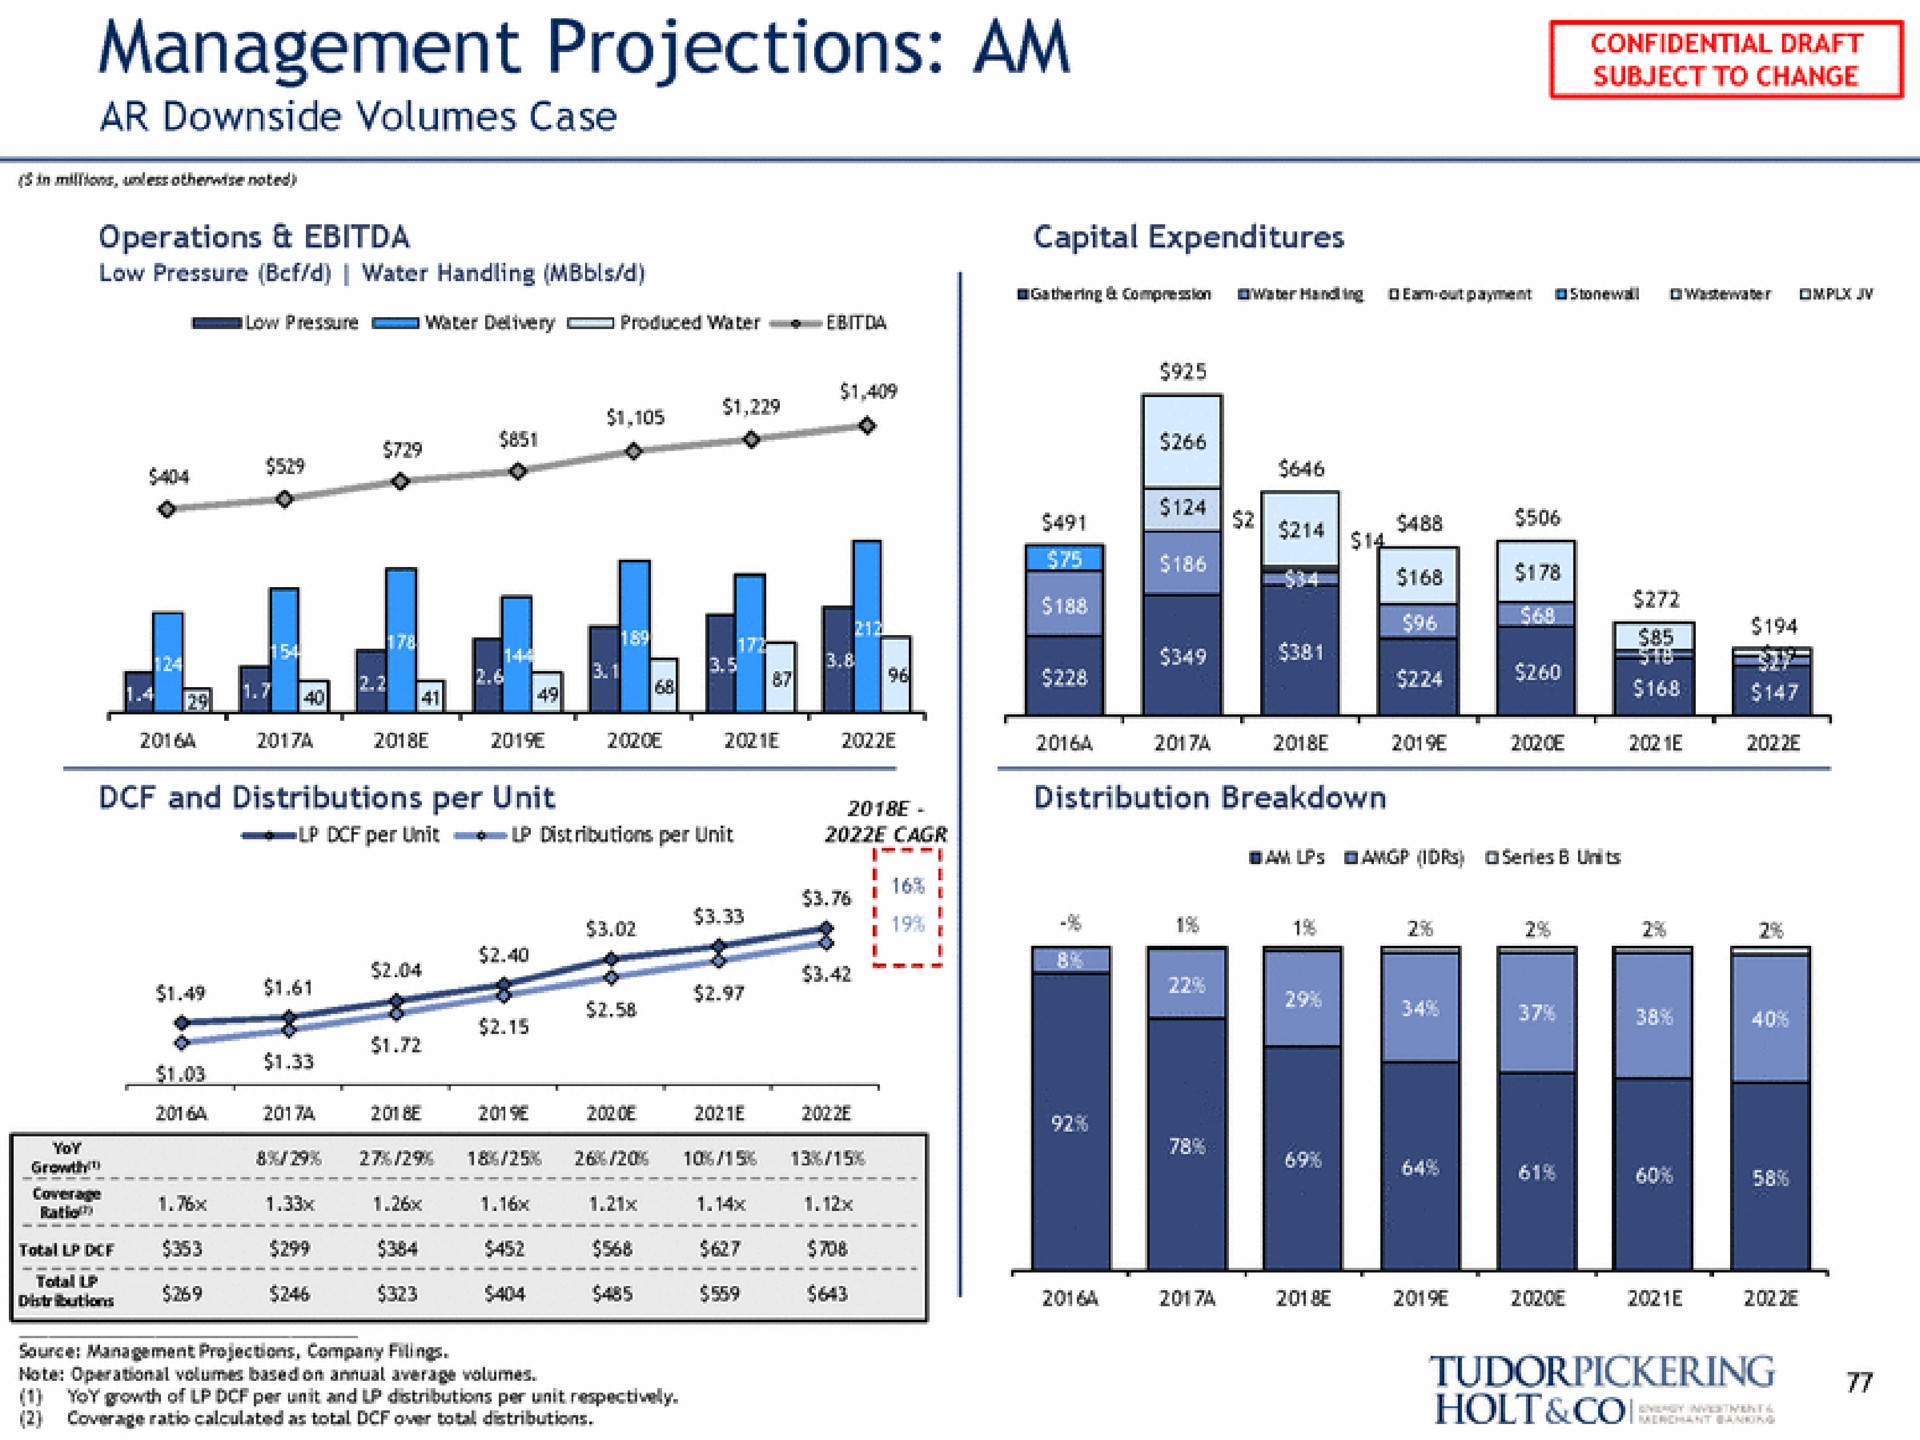 management projections am | Tudor, Pickering, Holt & Co